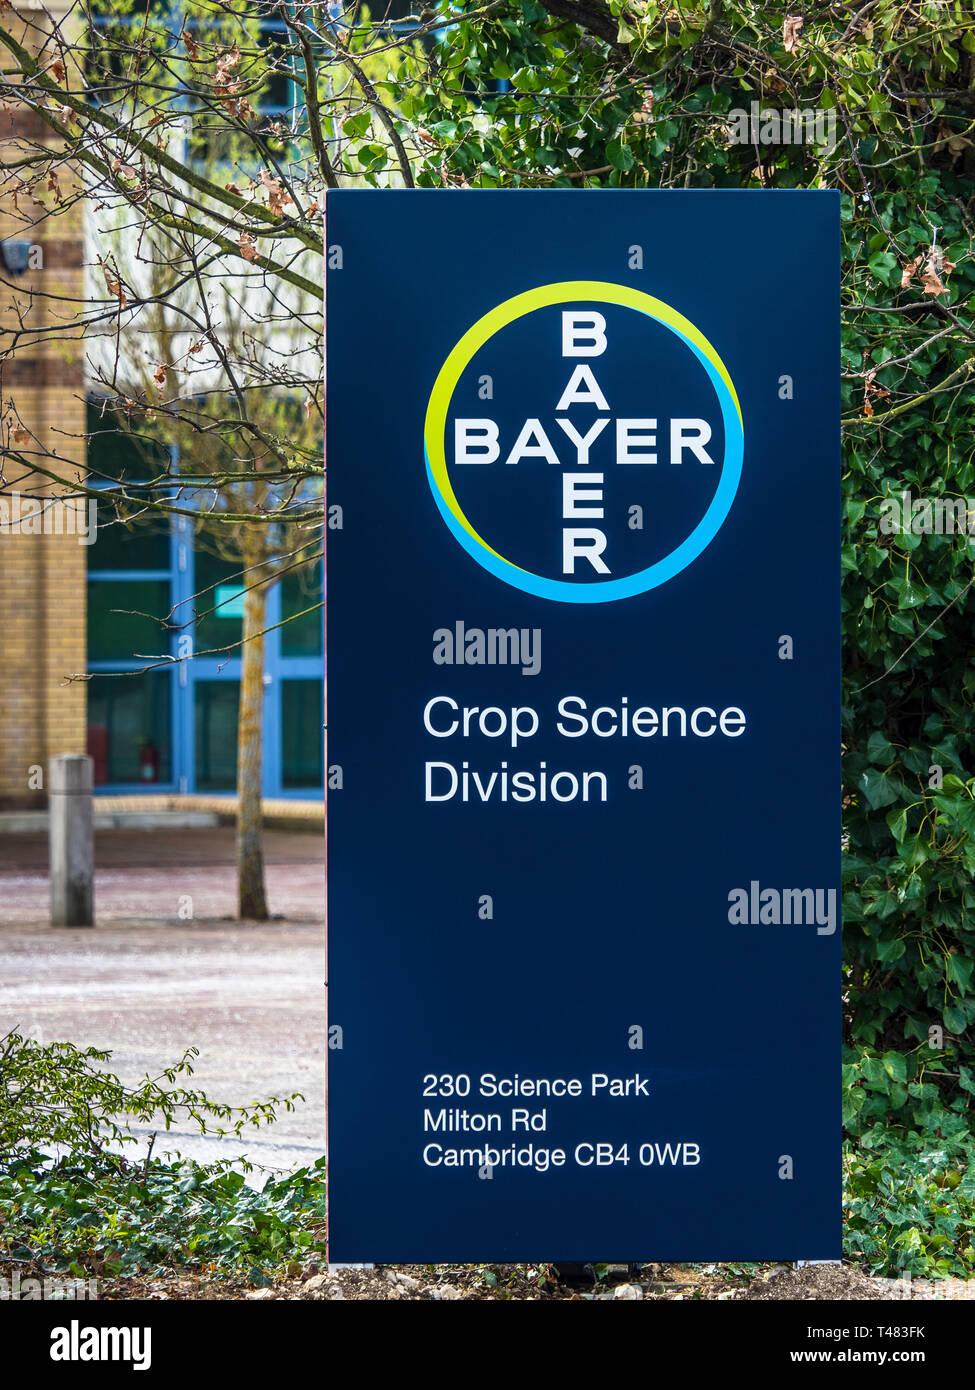 Bayer Crop Science Division im Cambridge Science Park, Cambridge UK Stockfoto